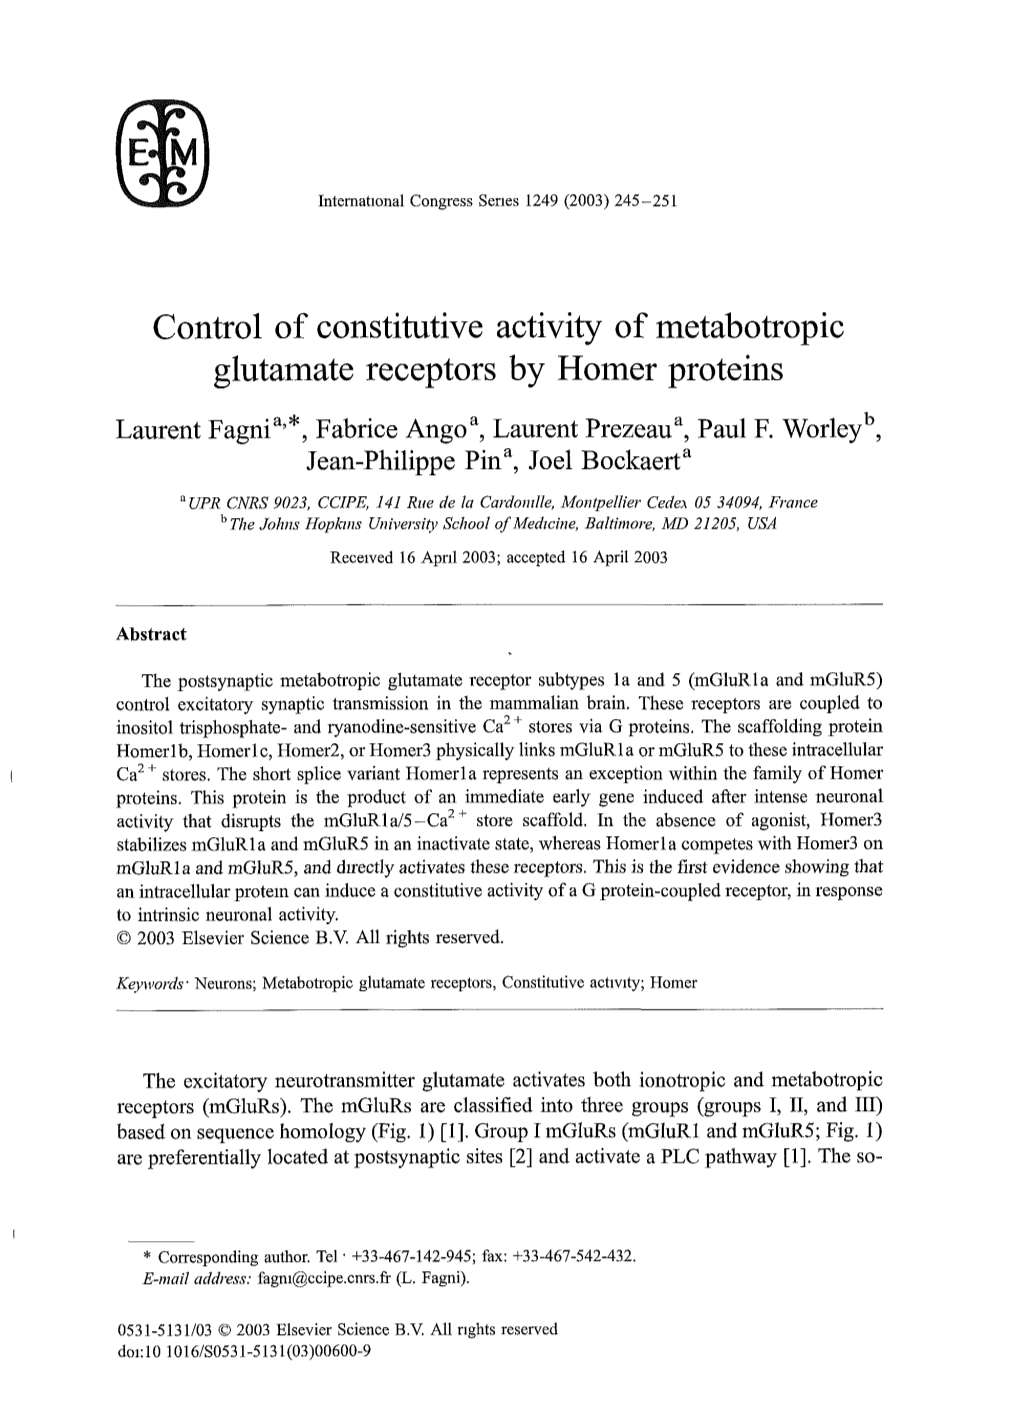 Control of Constitutive Activity of Metabotropic Glutamate Receptors by Homer Proteins Laurent Fagnia'*, Fabrice Angoa, Laurent Prezeaua, Paul F